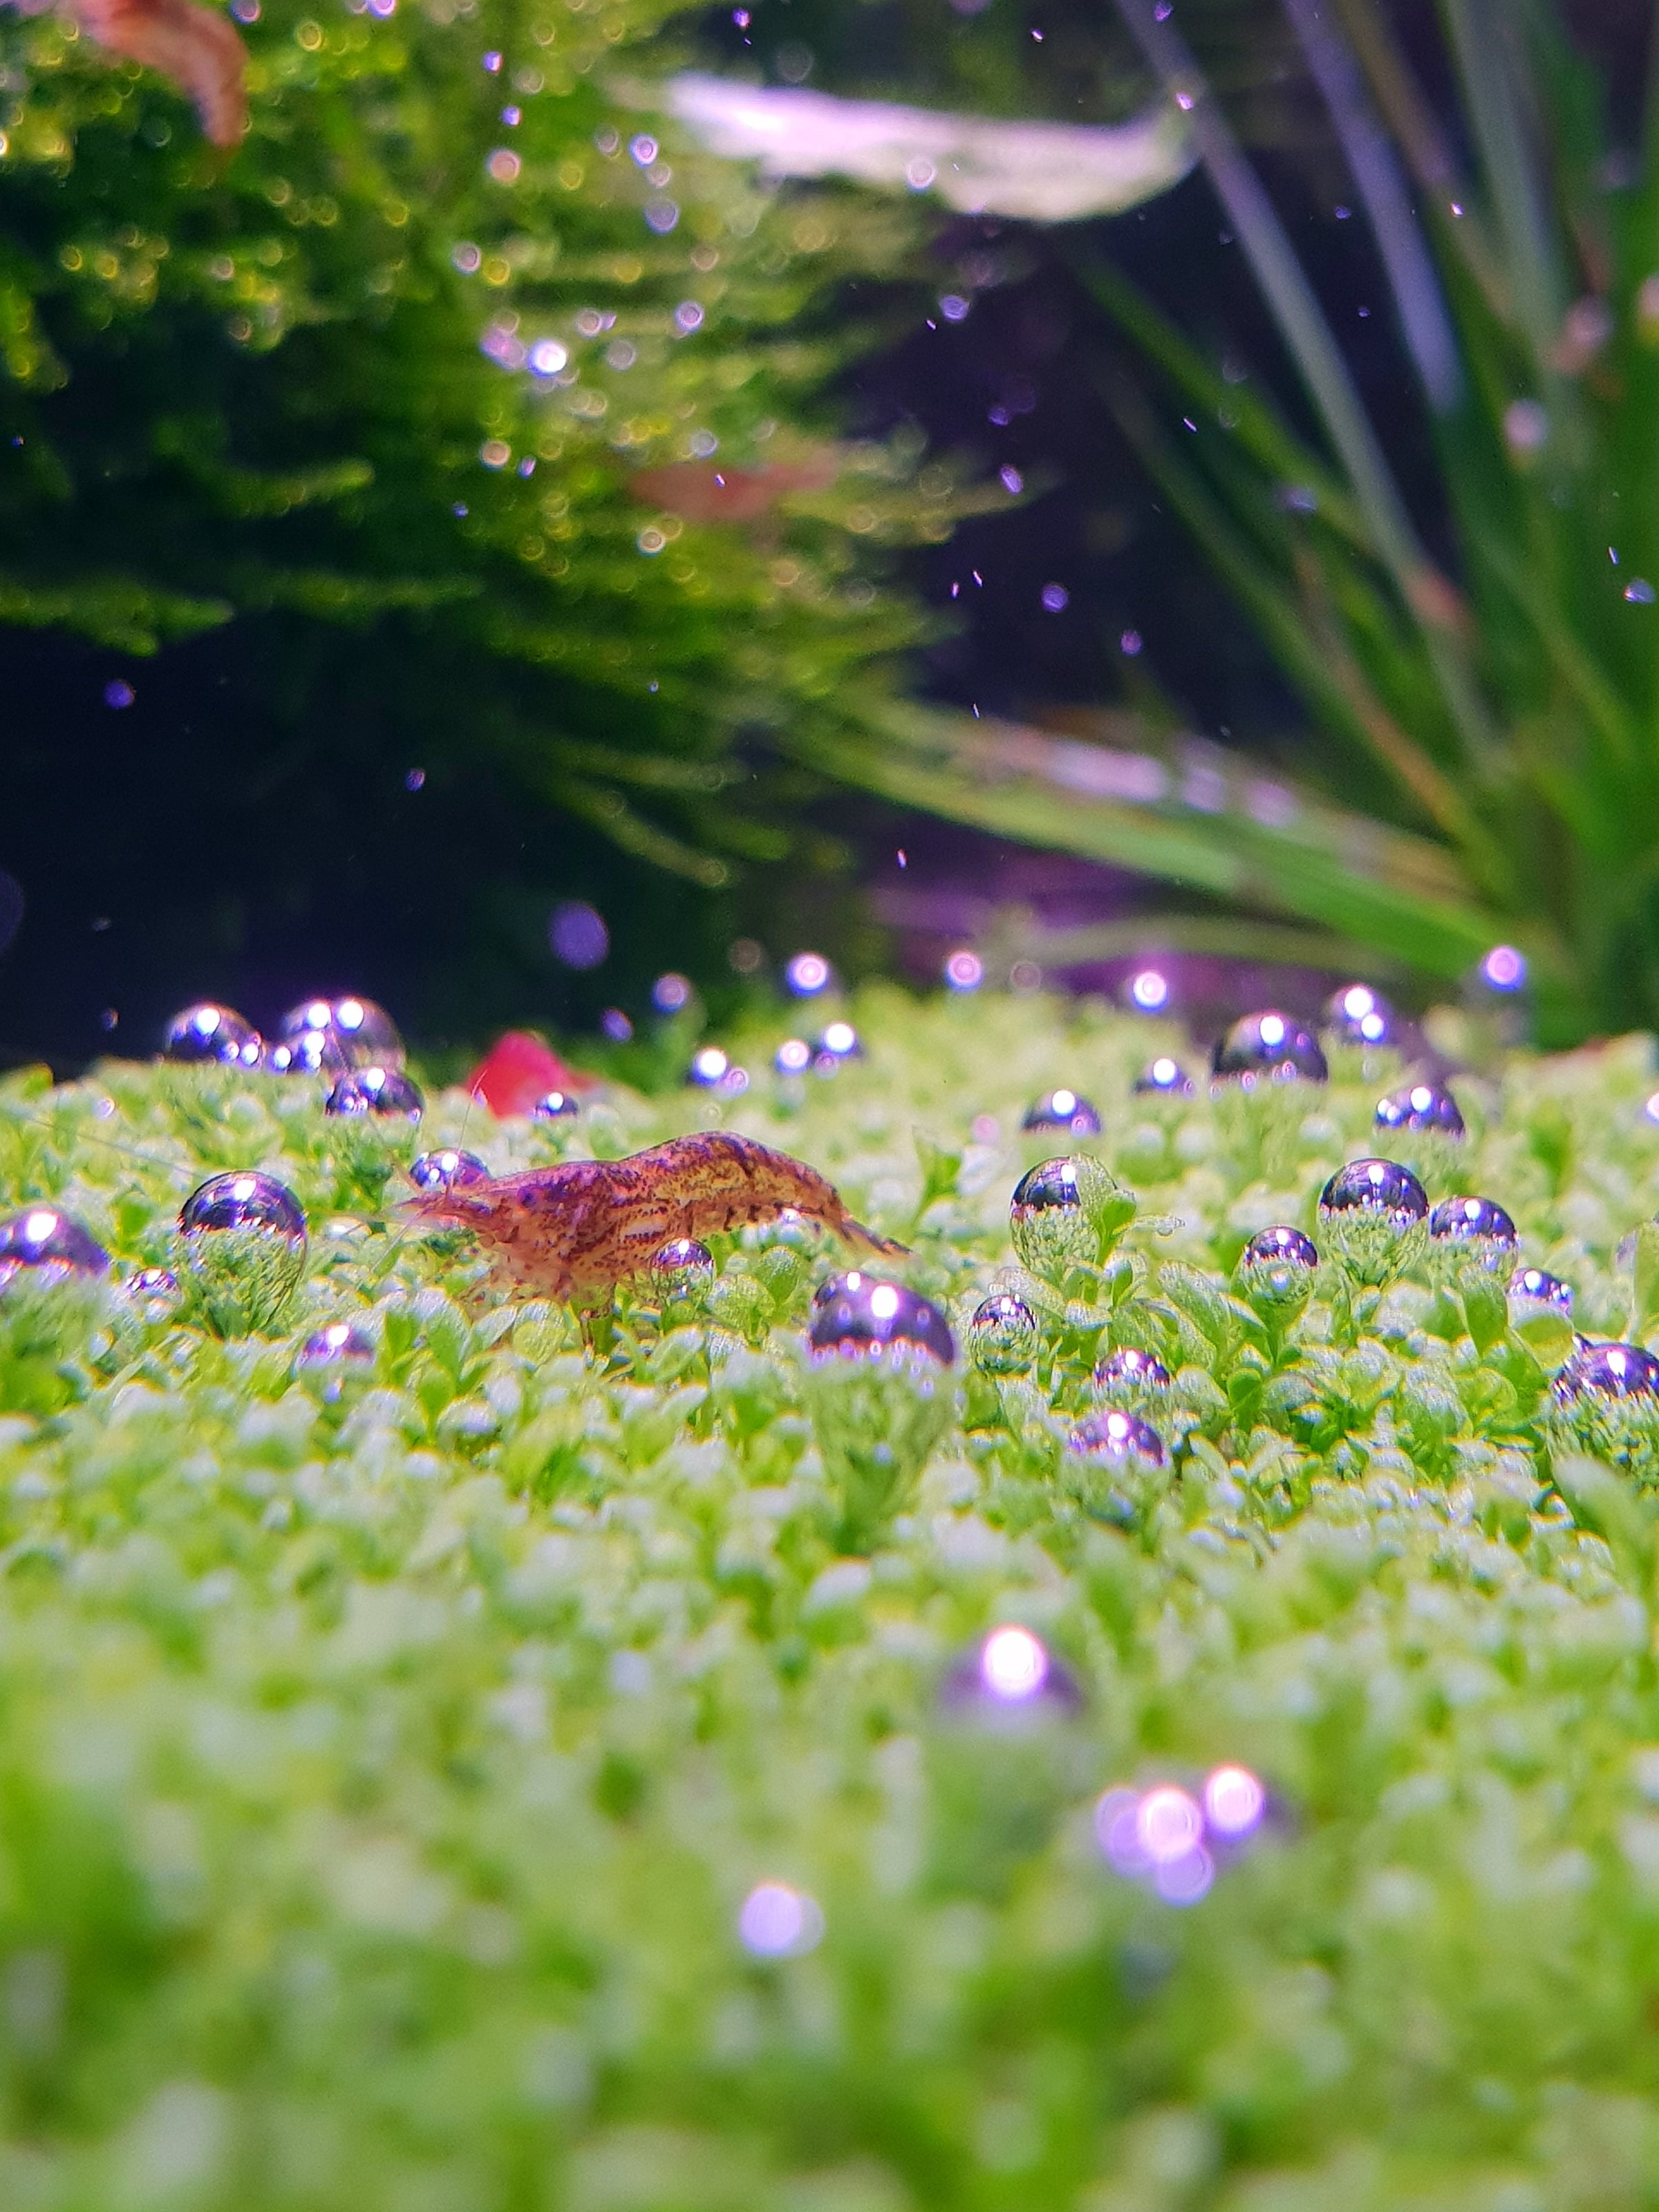 10 Best Carpet Plants For Stunning Aquarium Grass (Beginner's Guide)